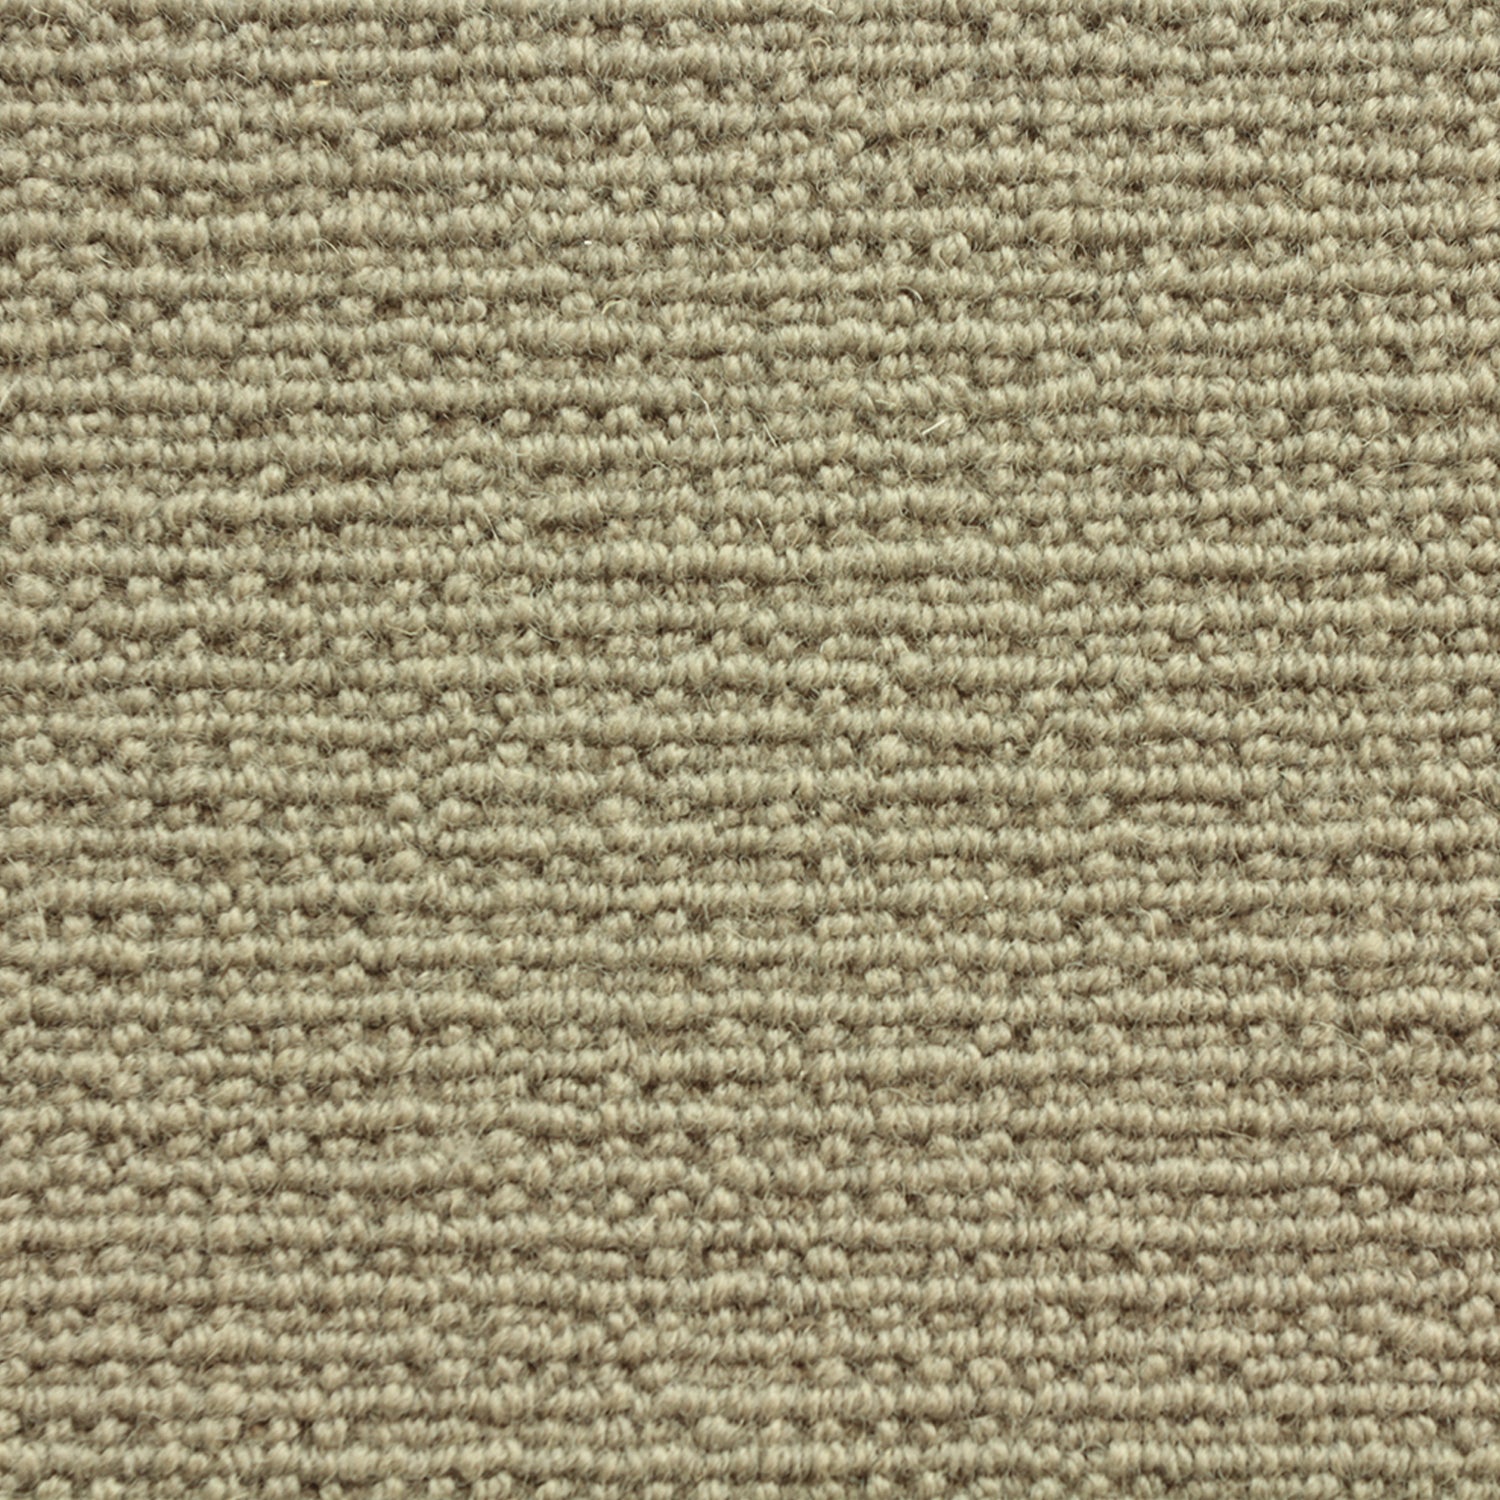 Wool broadloom carpet swatch in a chunky loop weave in khaki.